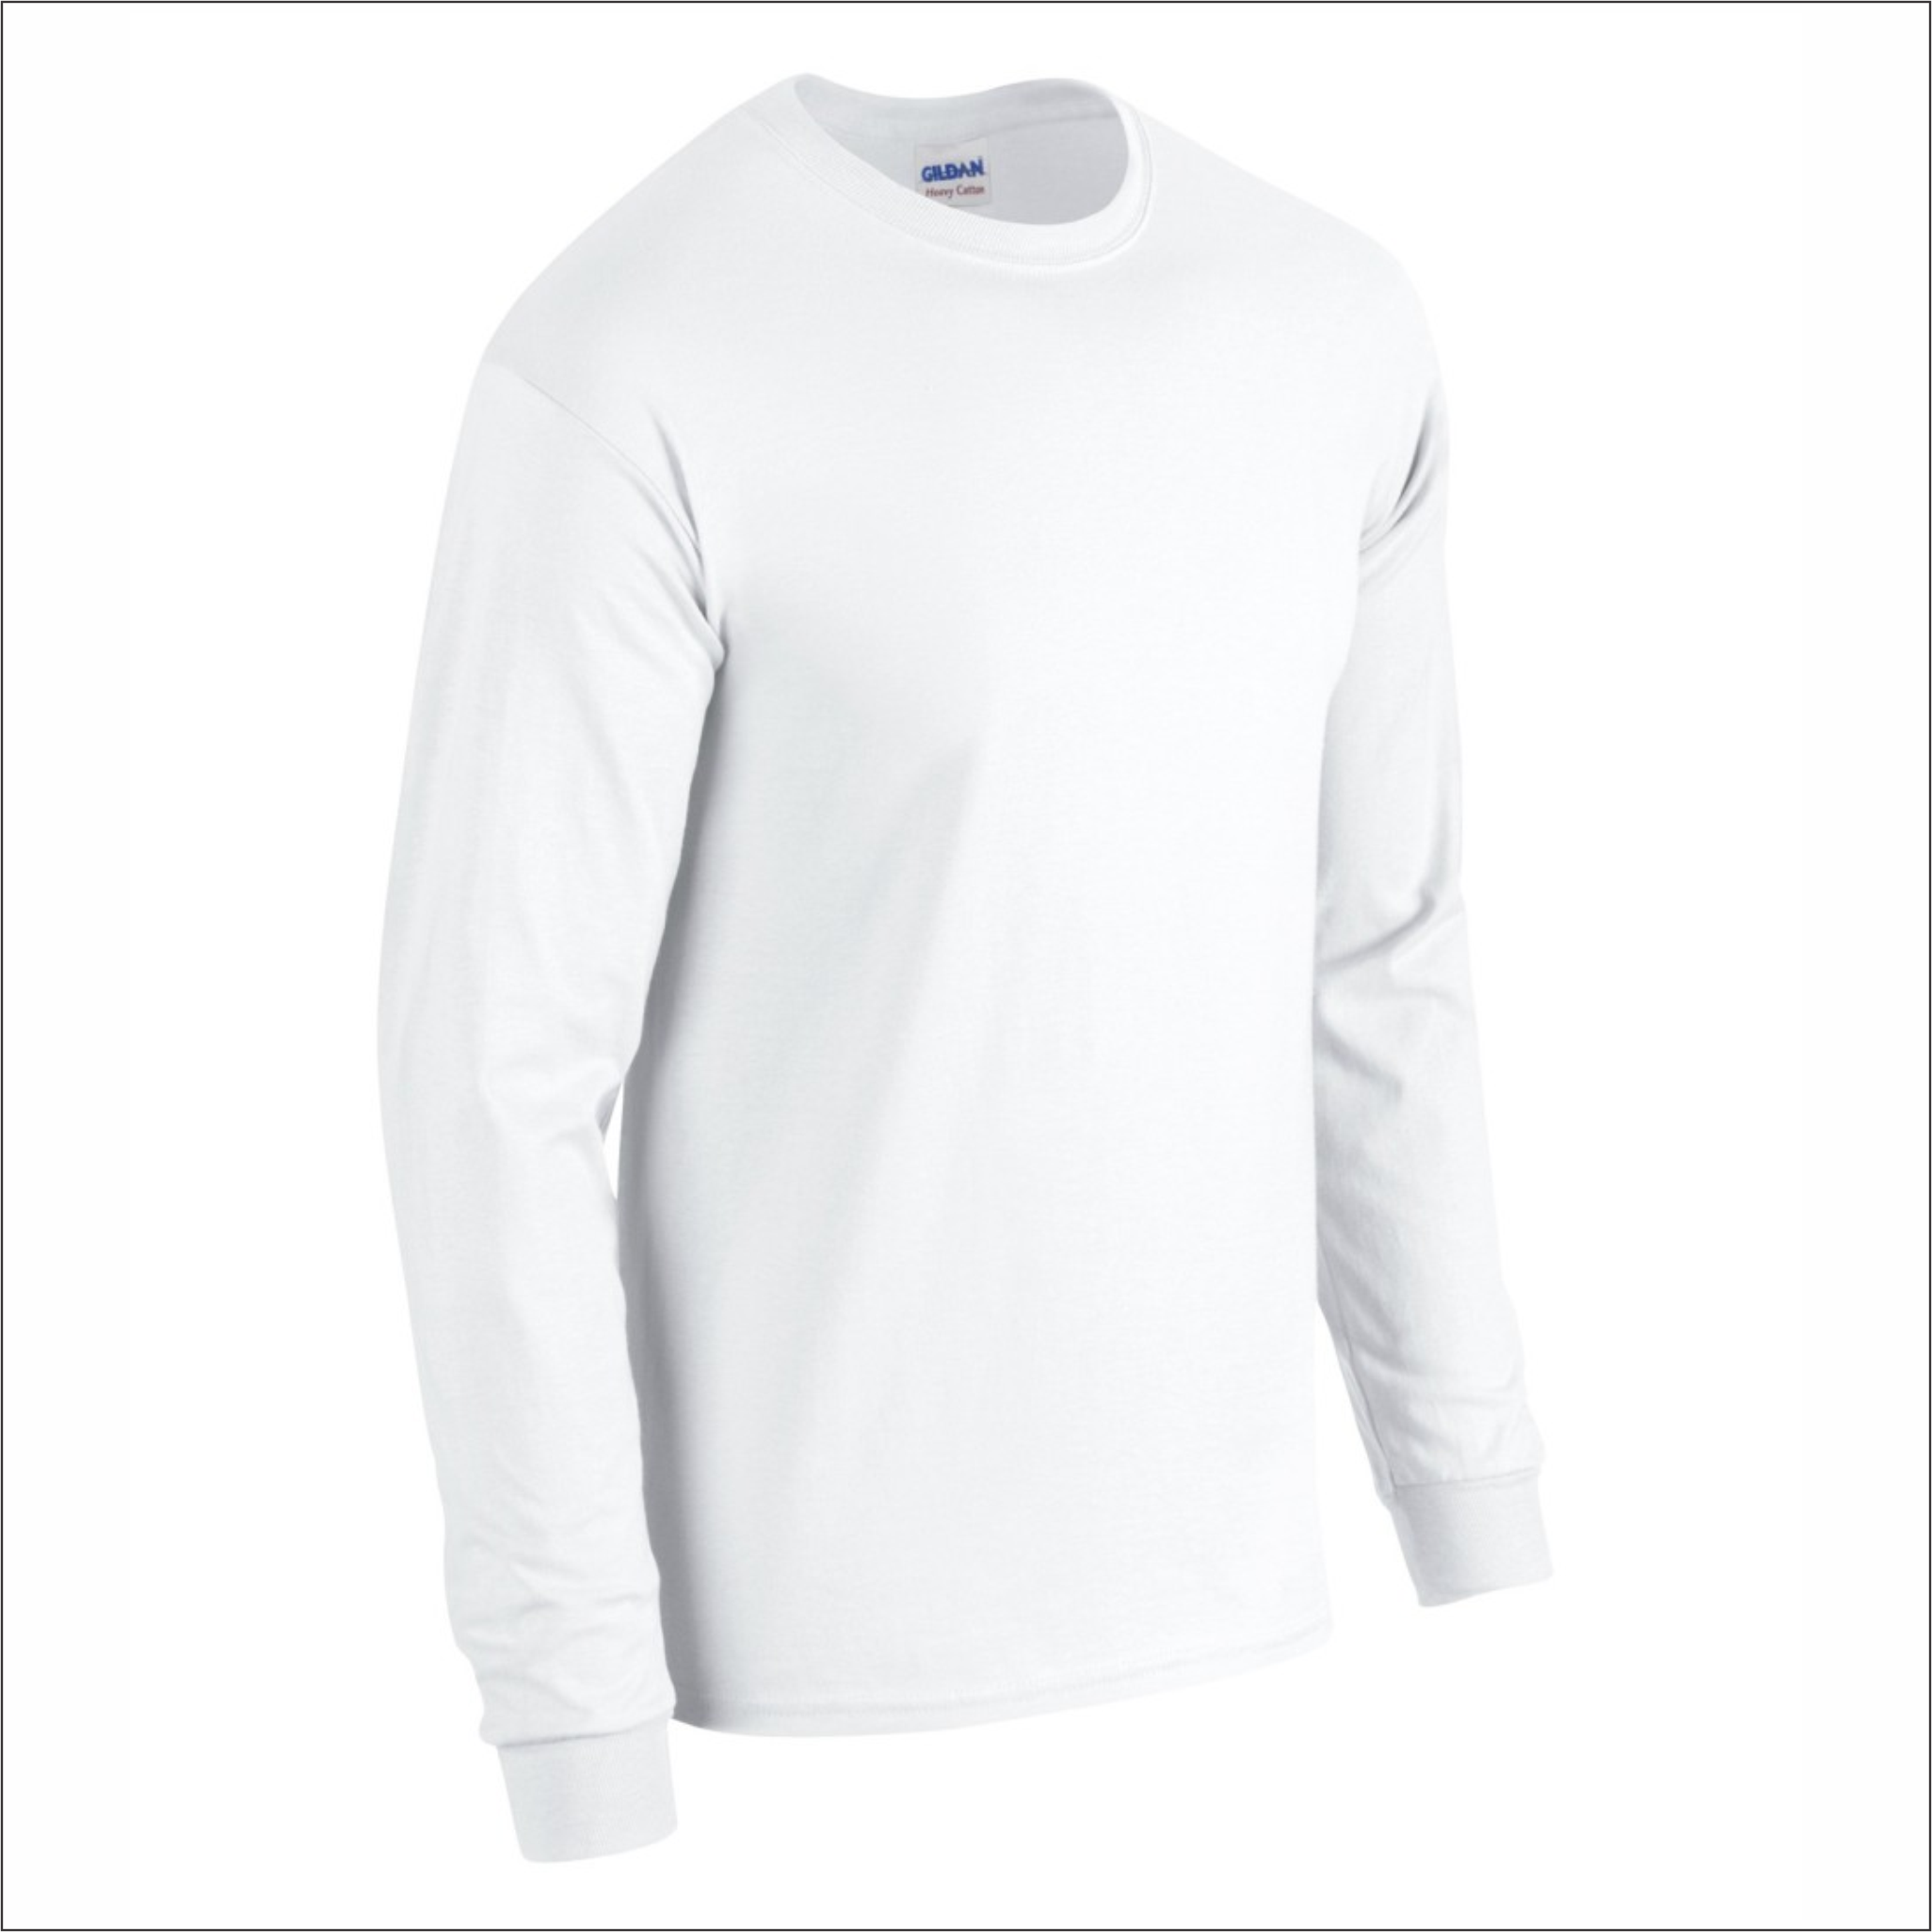 Mens Long Sleeve Shirt - Cotton - Gildan 5400